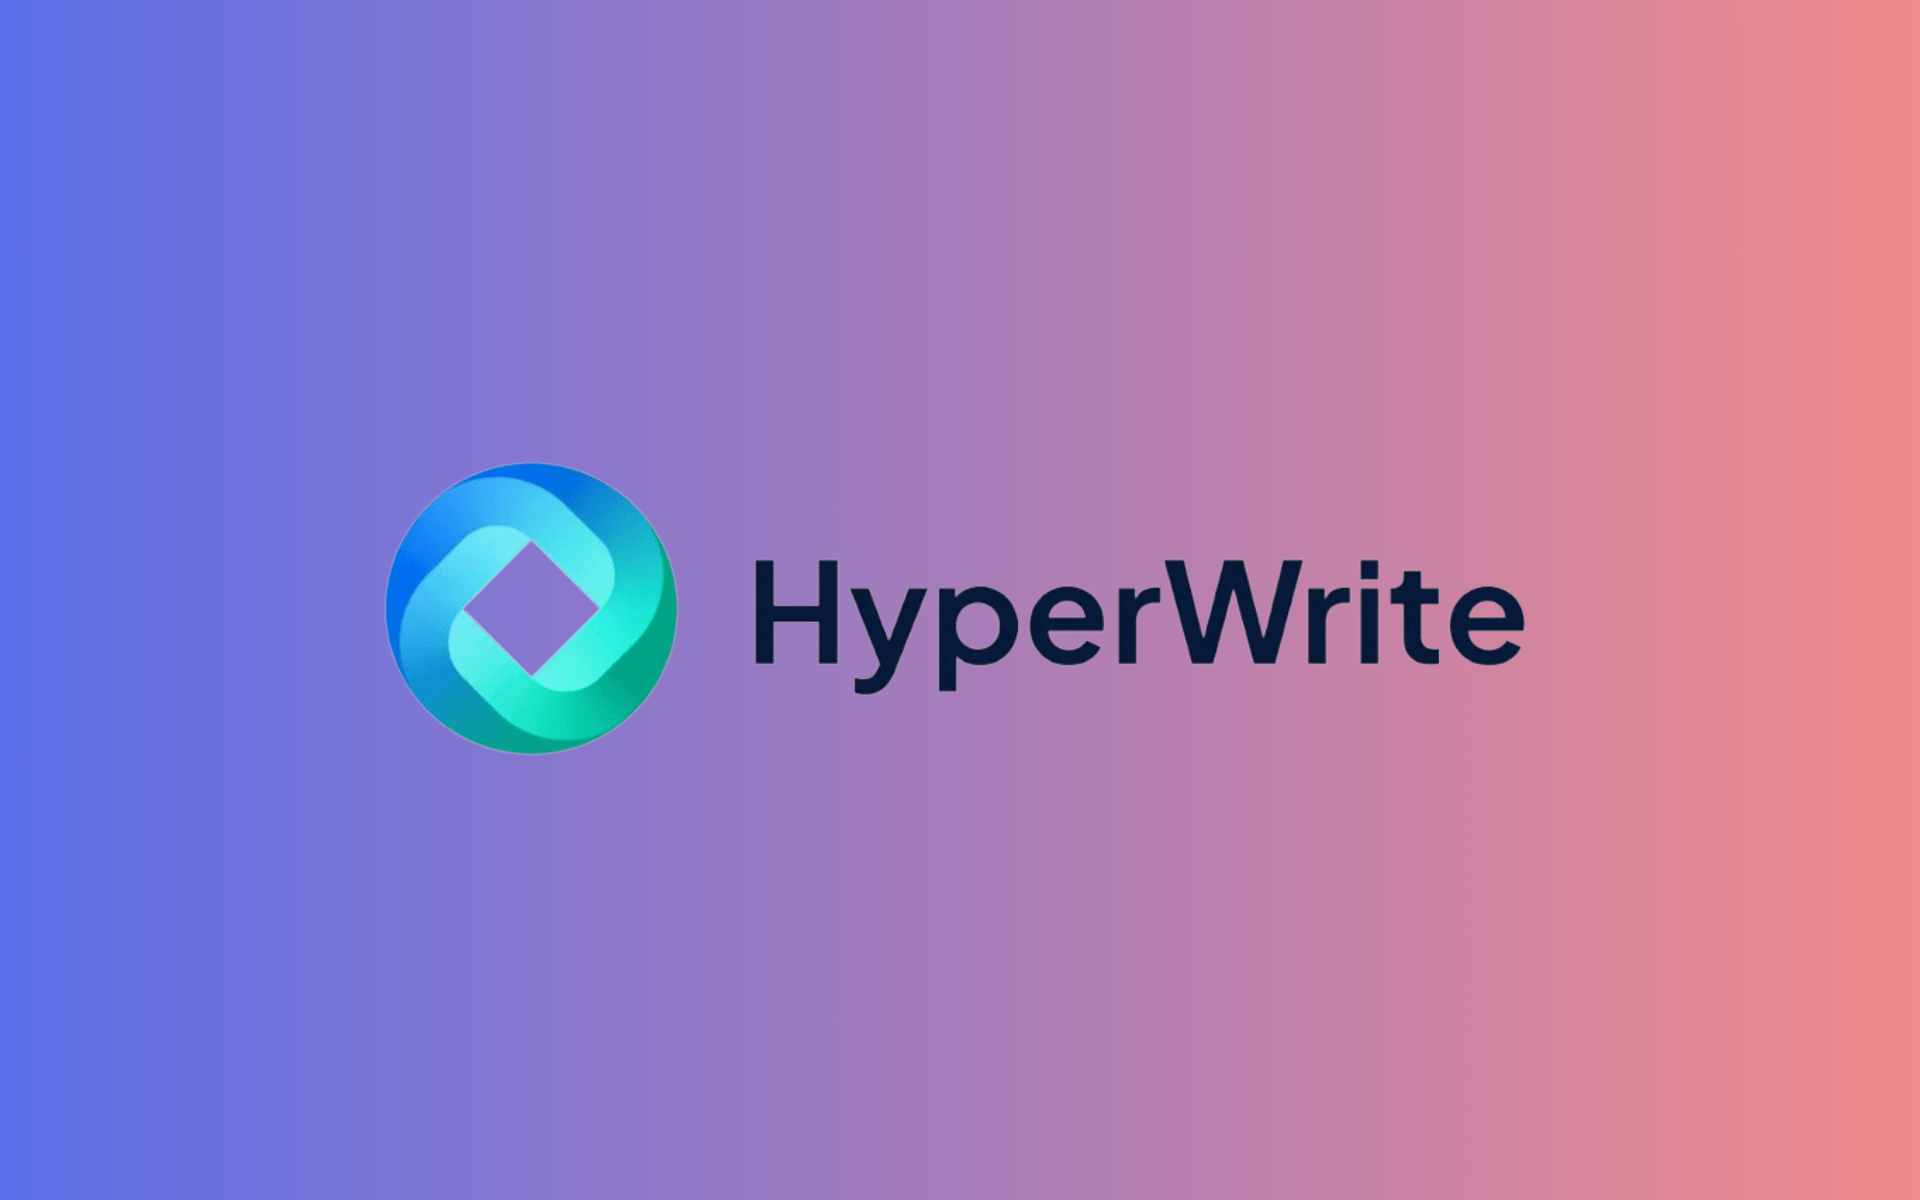 HyperWrite extension